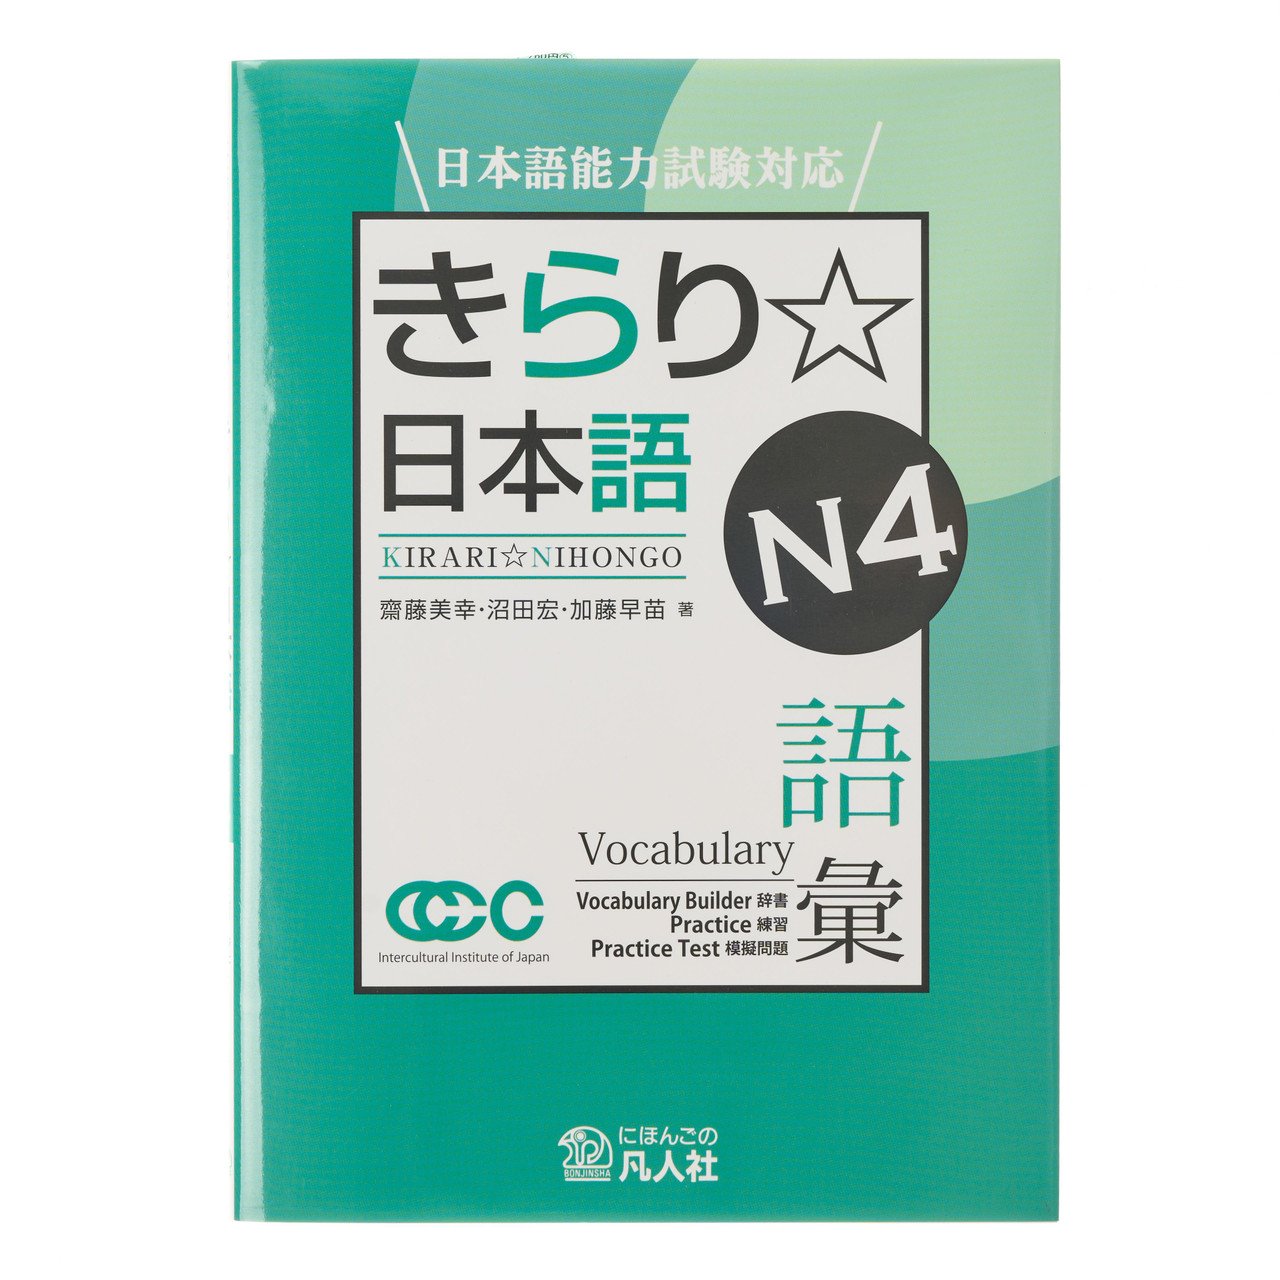 Kirari Nihongo N4 Vocabulary Support for the JLPT Book - 350 g